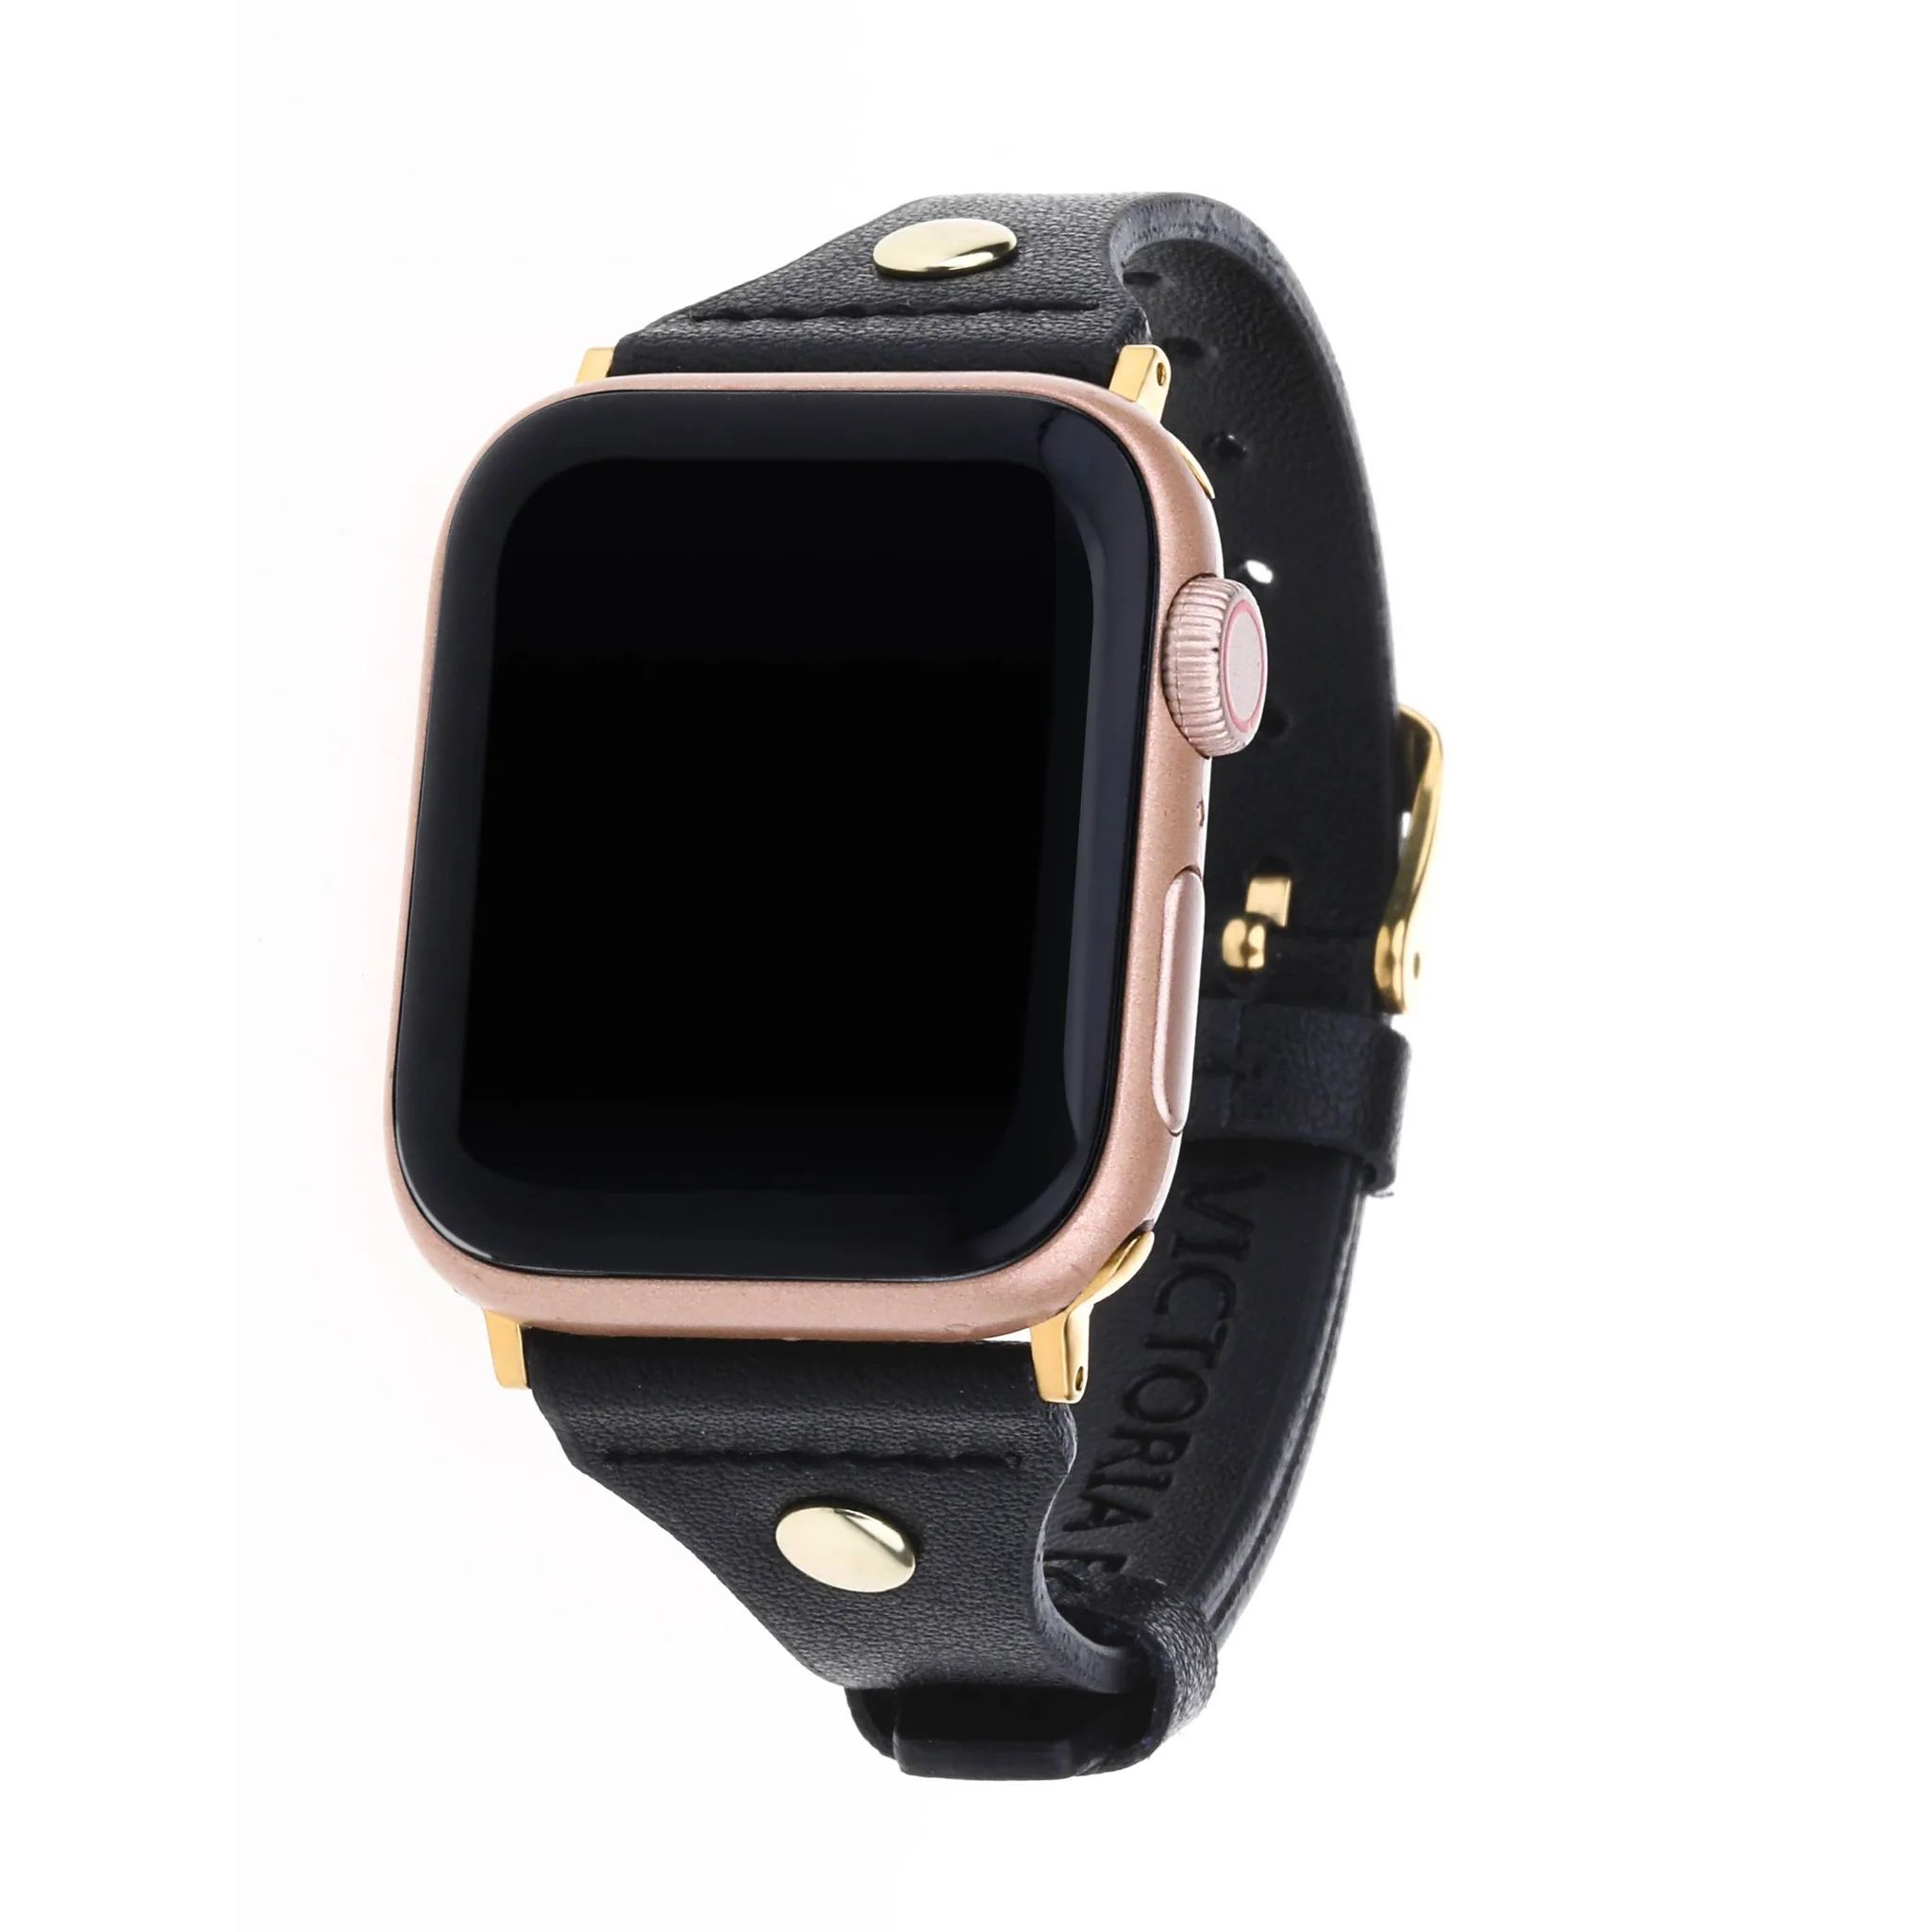 Black on Gold Apple Watch | Victoria Emerson